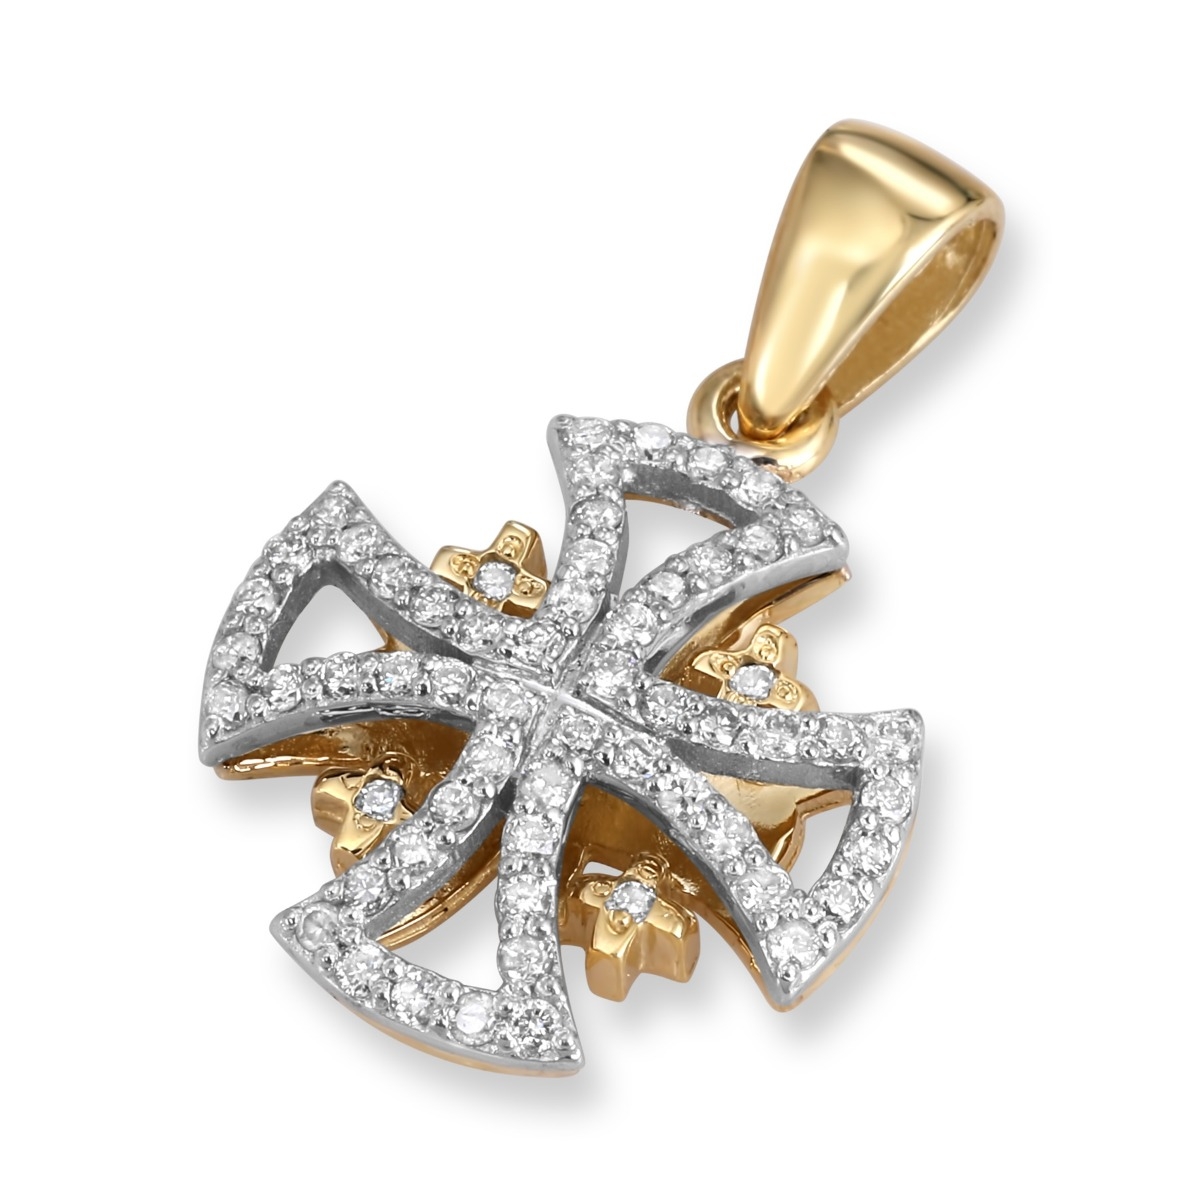 Anbinder Jewelry Two Tone 14K White & Yellow Gold and Diamond Tiered Splayed Jerusalem Cross Pendant with 60 Diamonds - 1